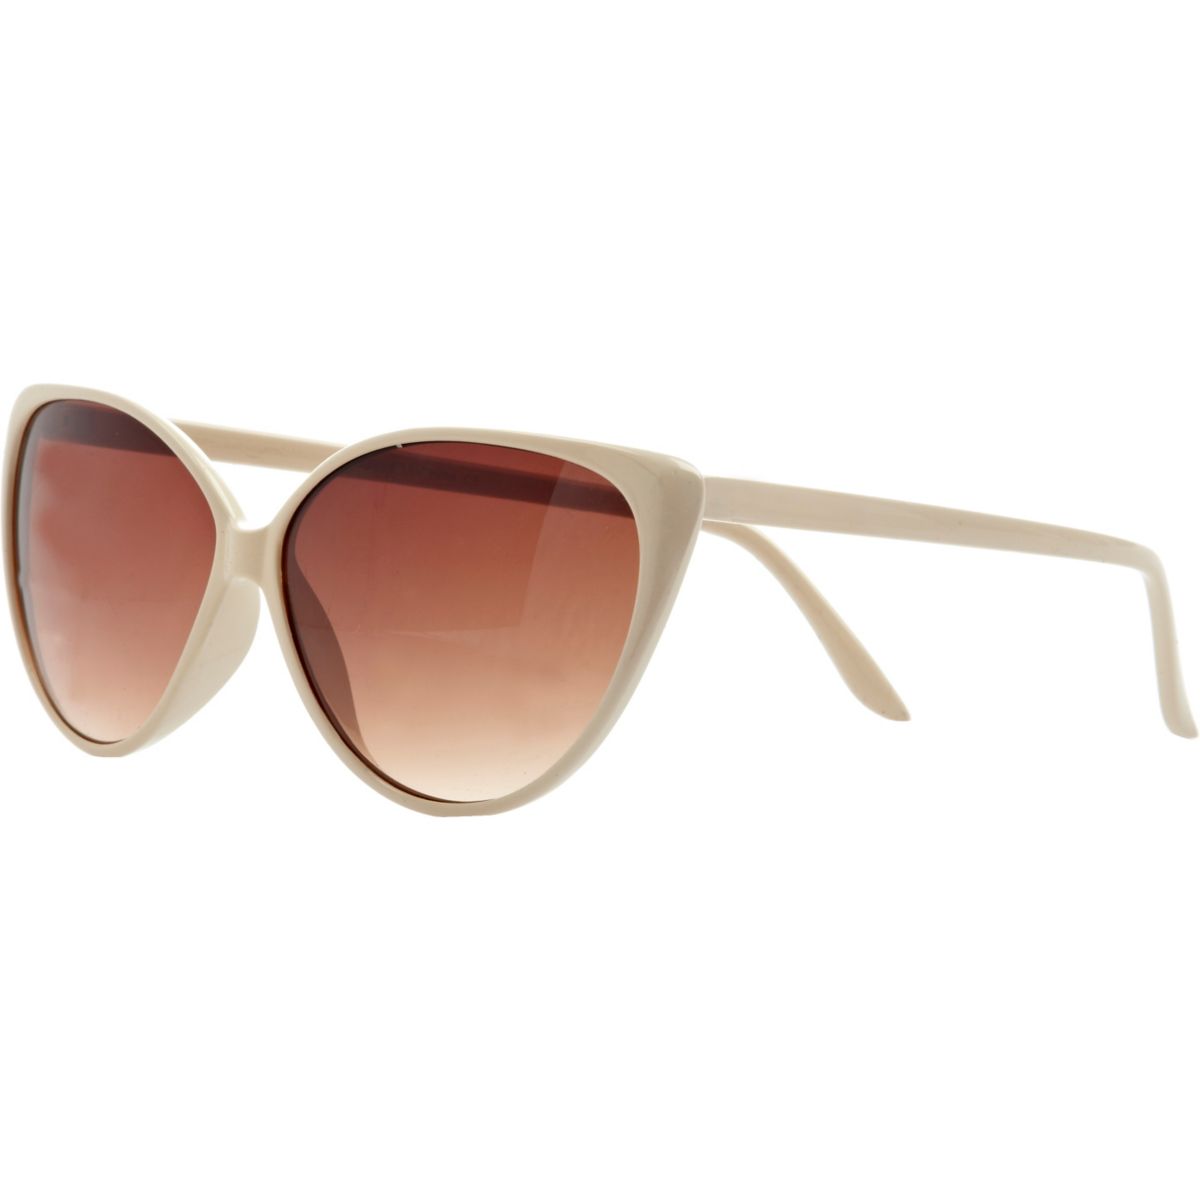 Cream cat eye sunglasses - Sunglasses - Sale - women